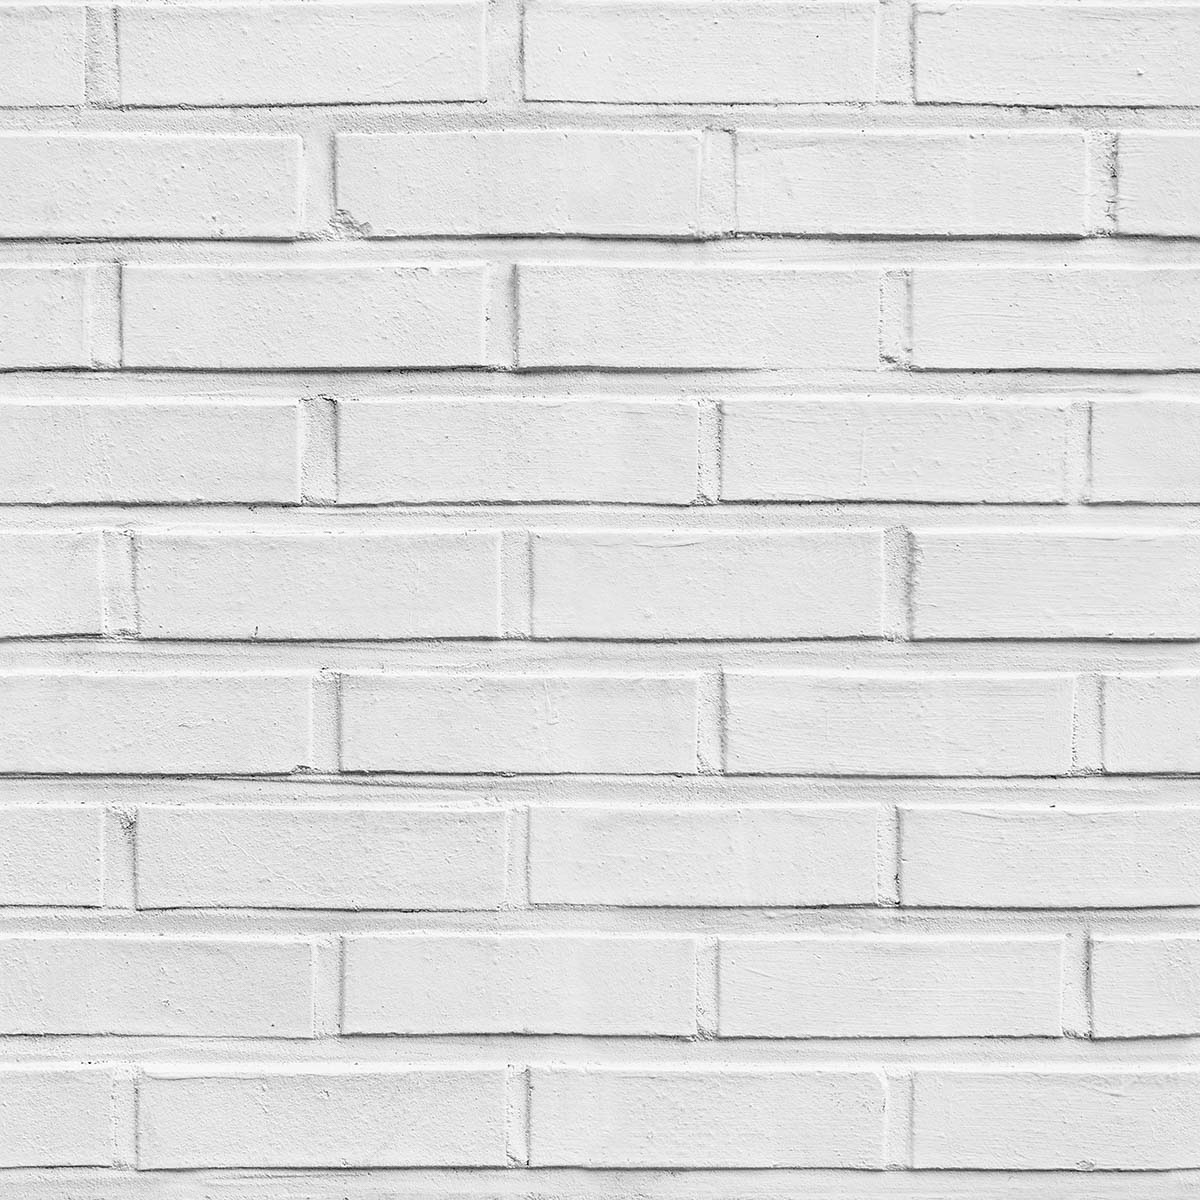 A white brick wall with a few bricks